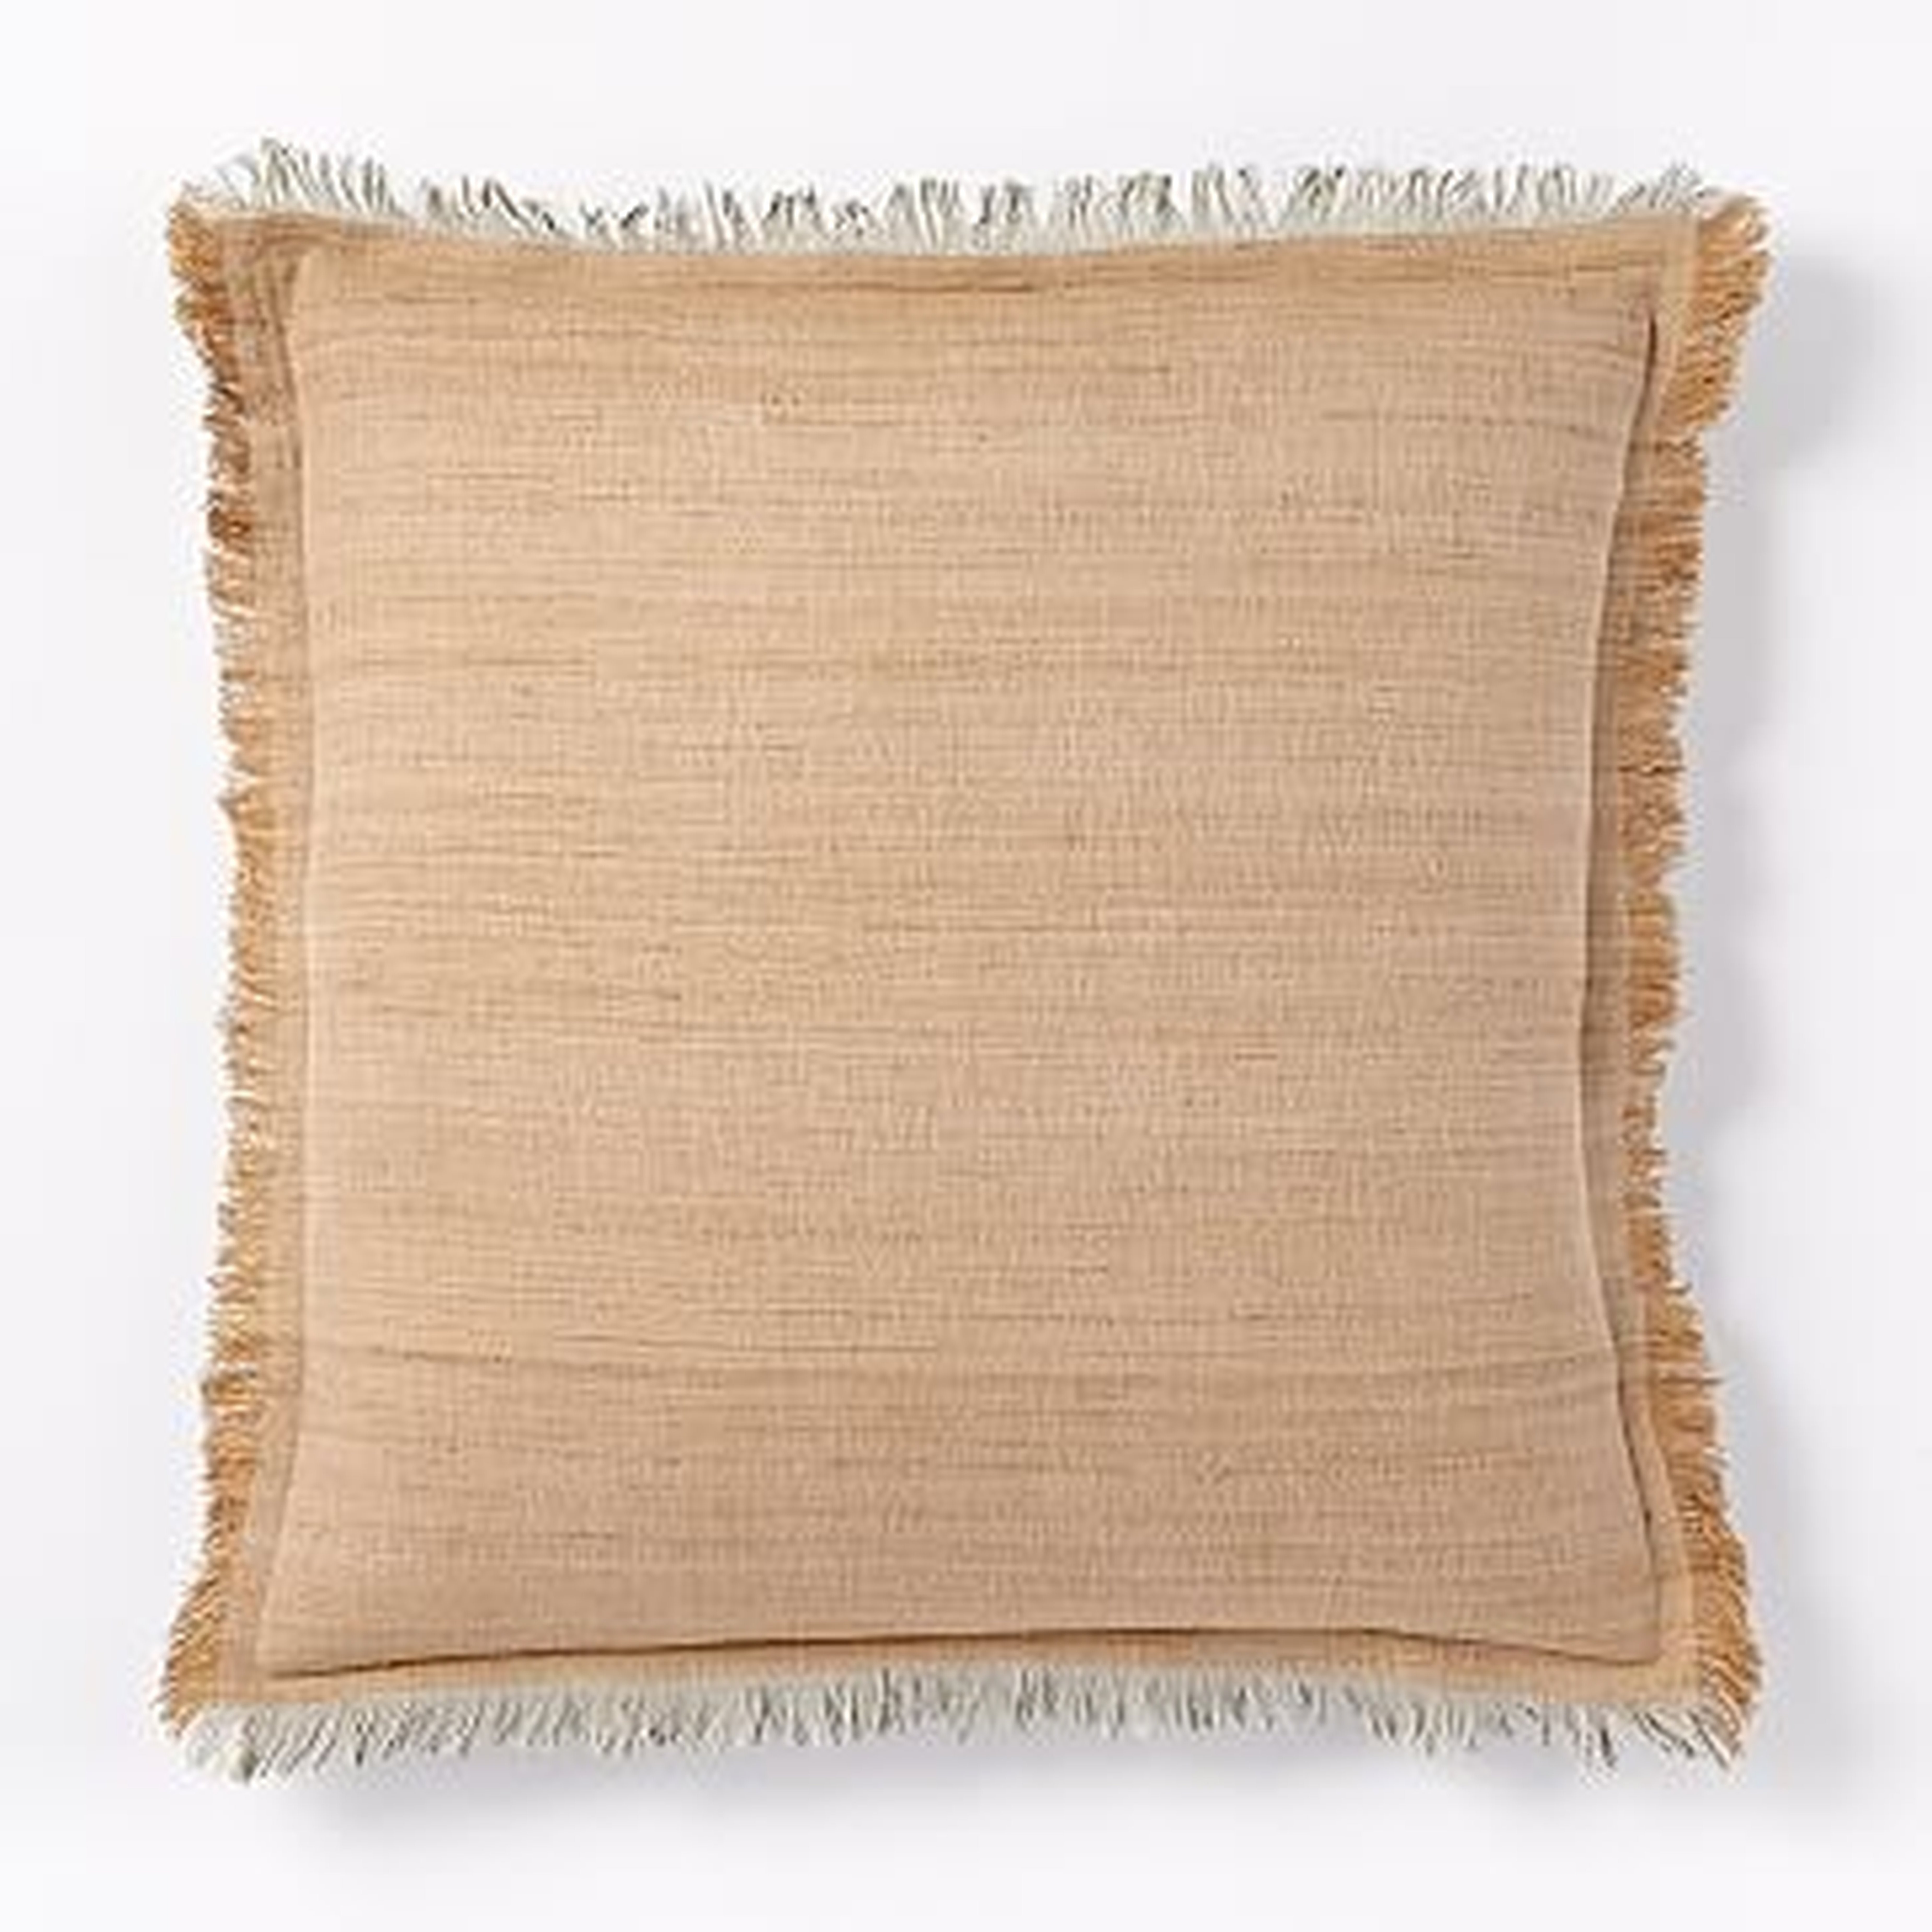 Textured Silk Fringe Pillow Cover, 20"x20", Gold Dust - West Elm